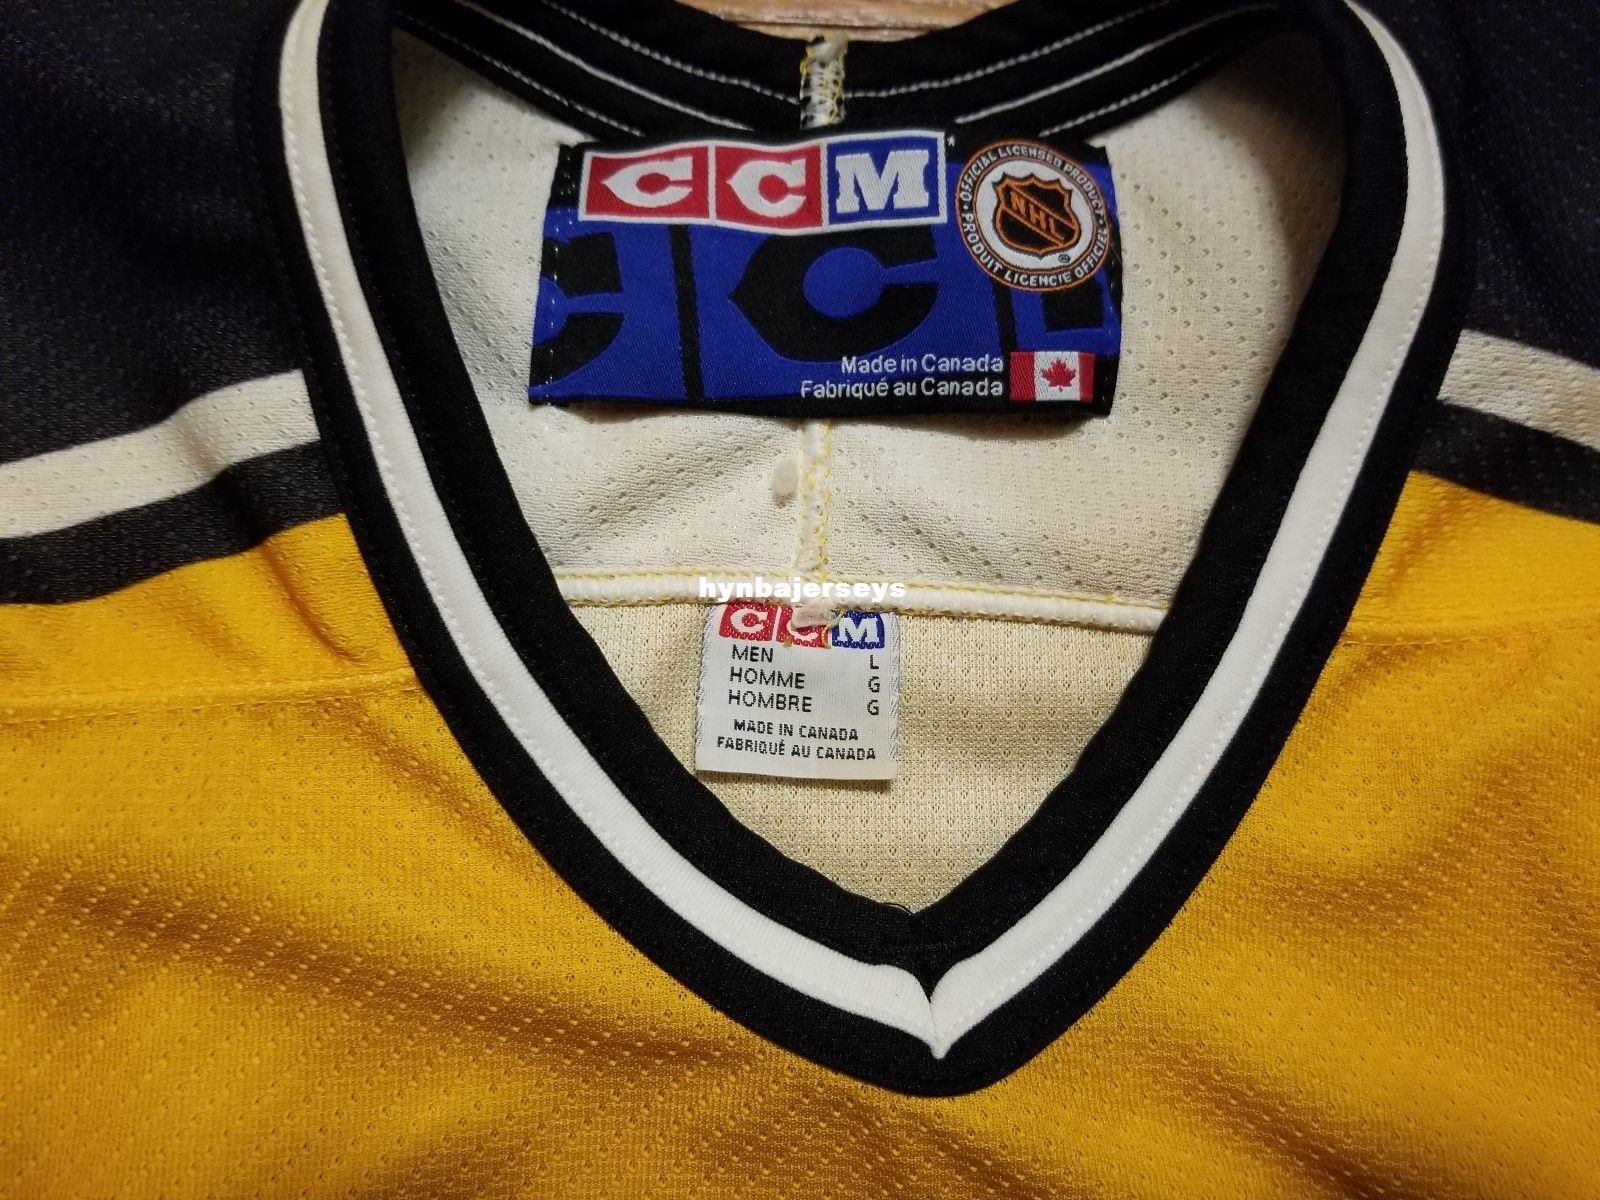 Boston Bruins Yellow Pooh Bear, CCM 4th gen, size XL - blank